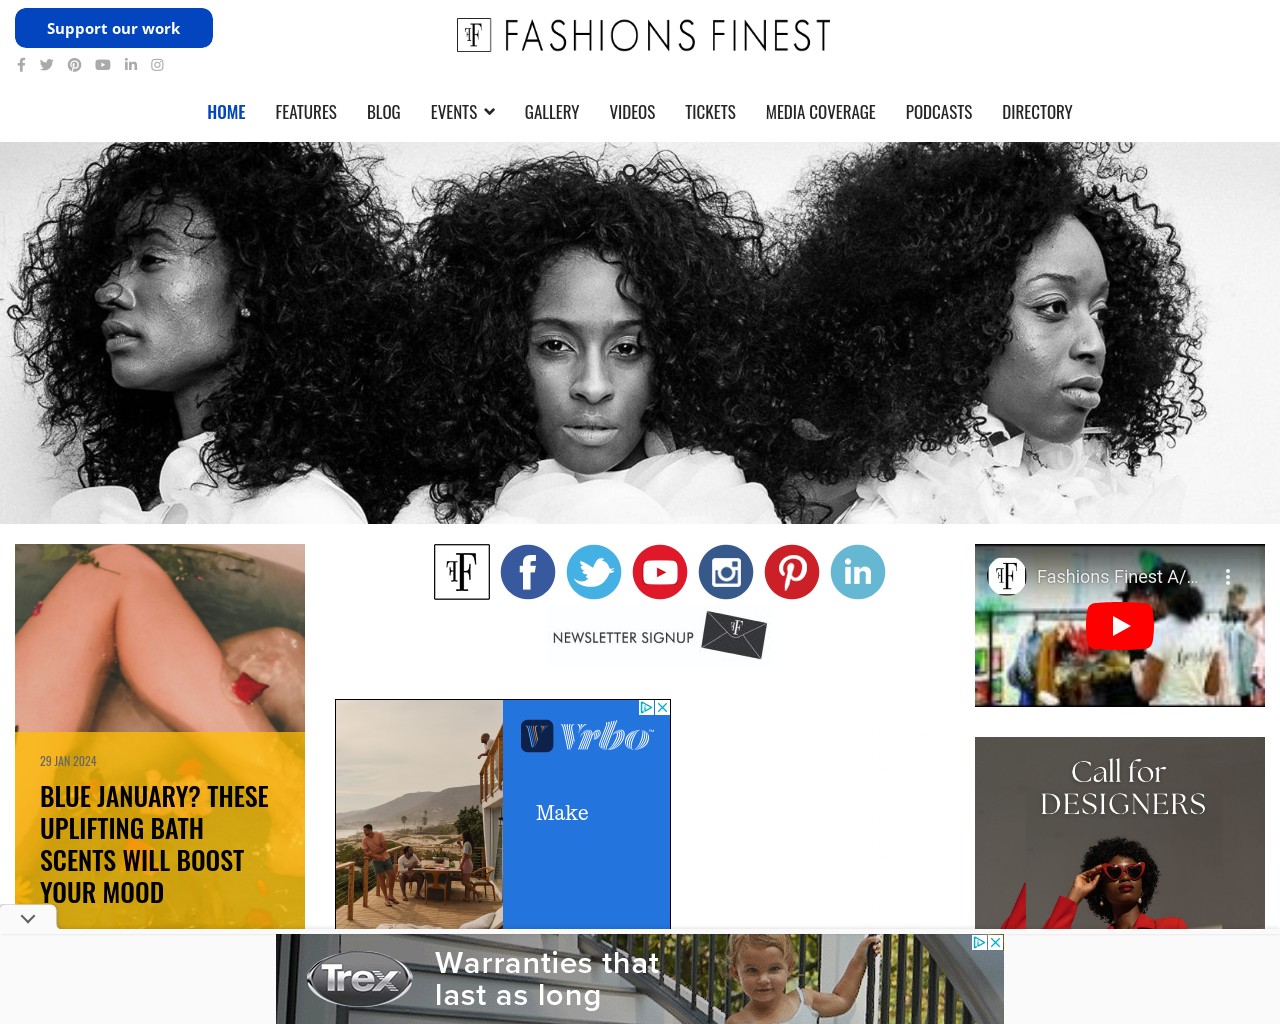 fashionsfinest.com